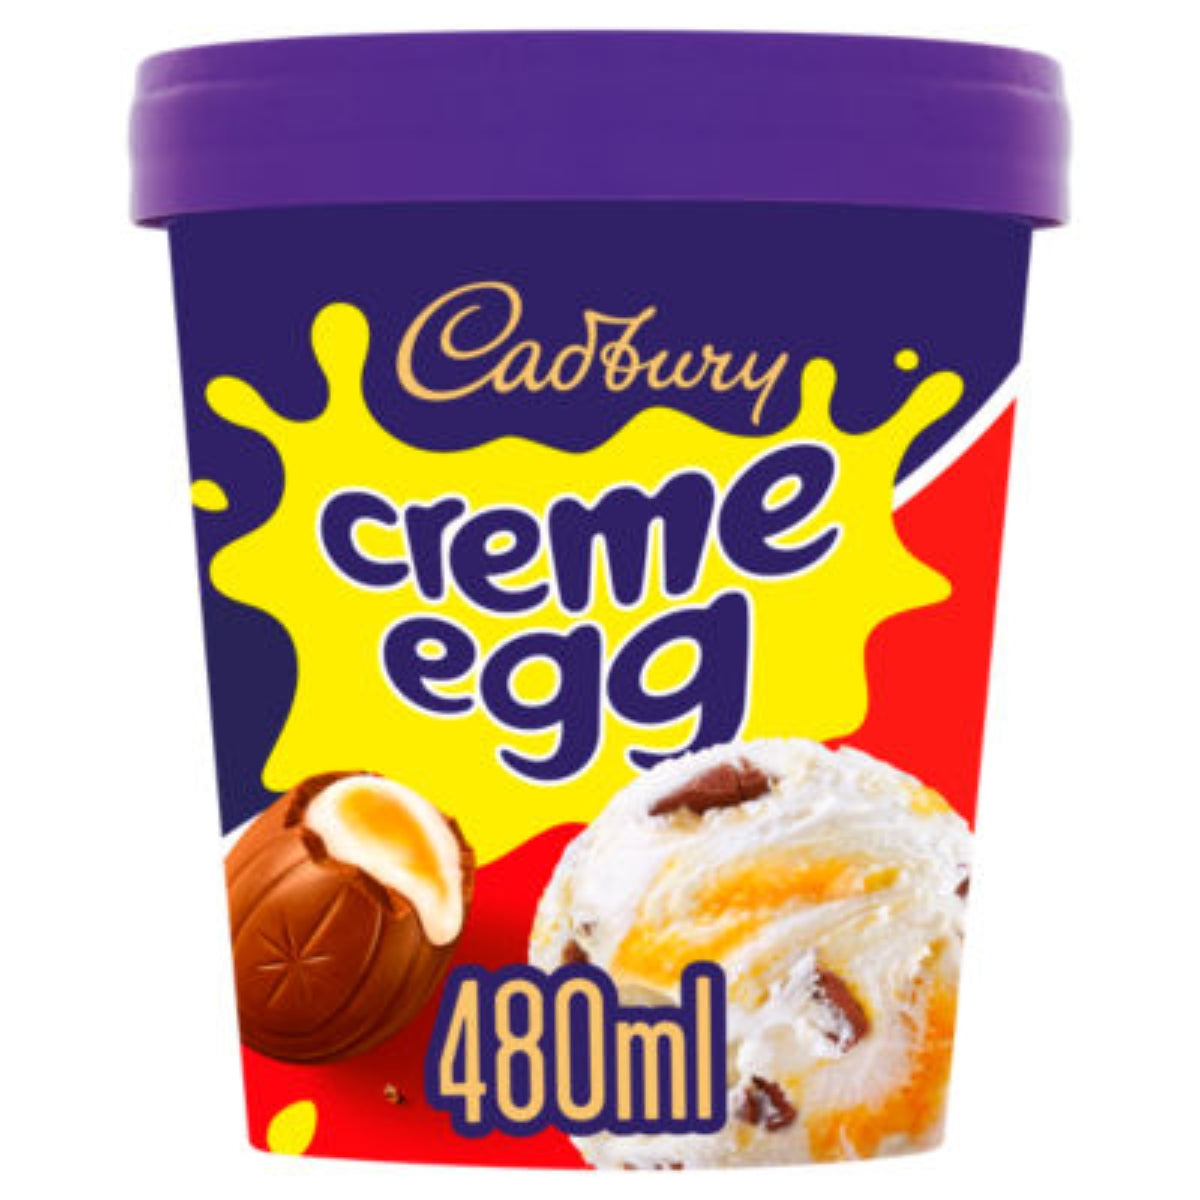 A Cadbury - Creme Egg Ice Cream Tub - 480ml.